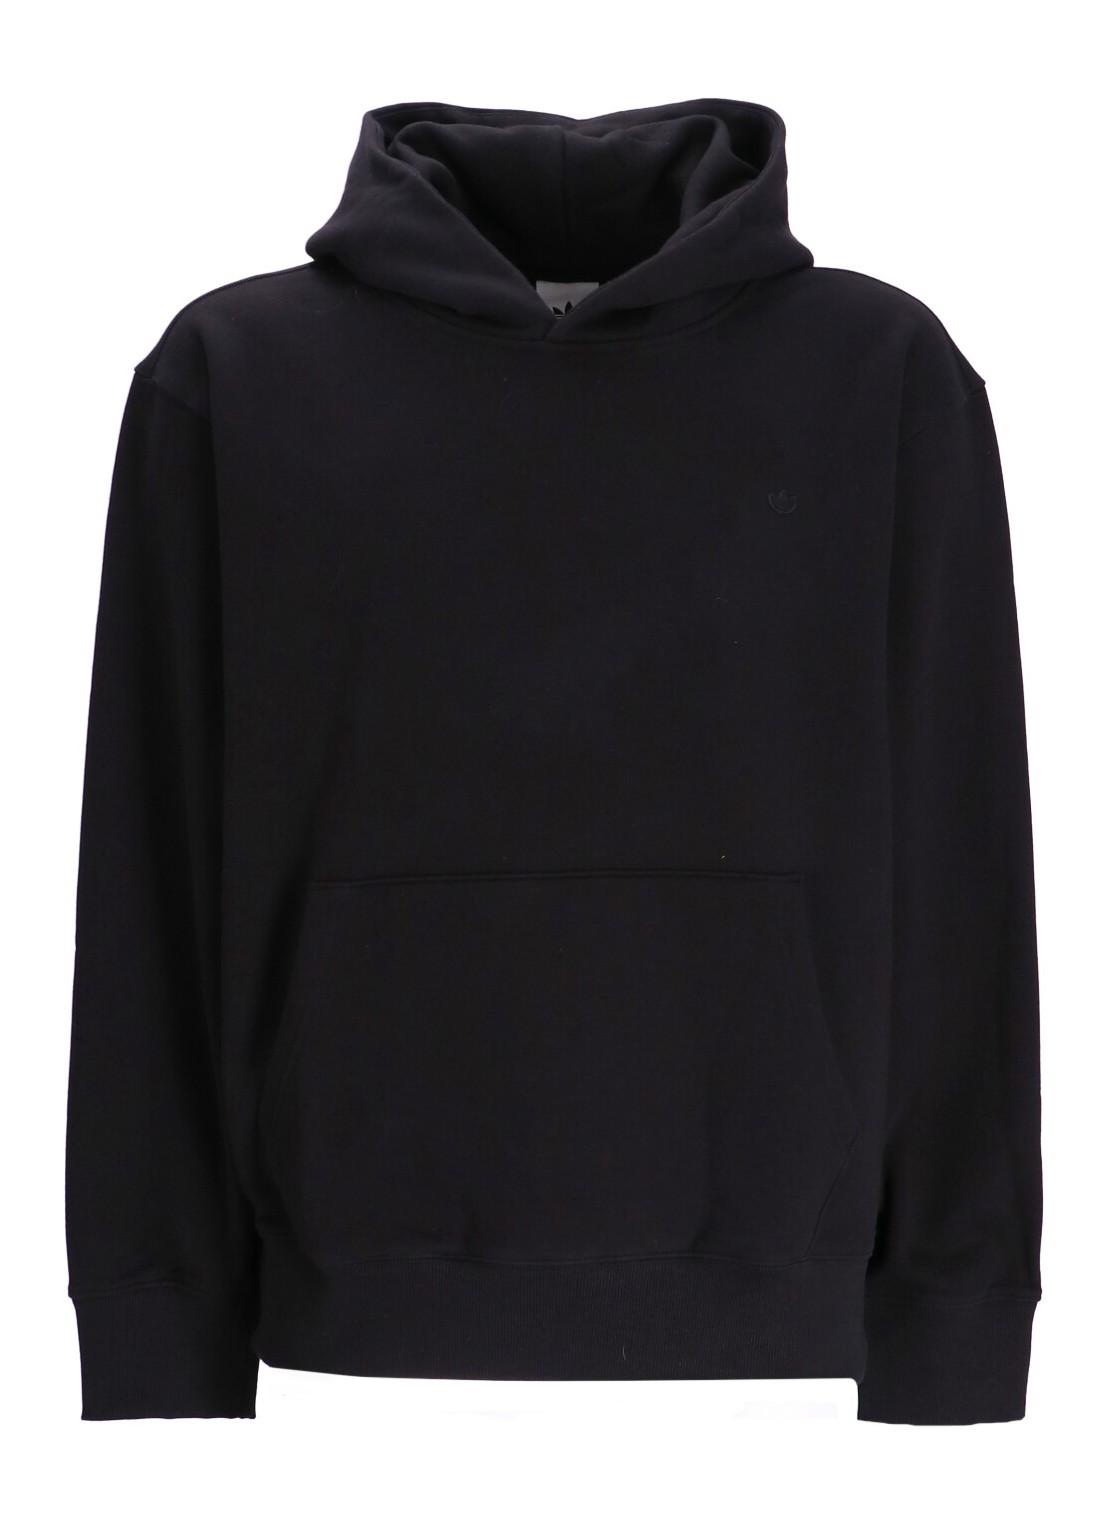 Sudadera adidas originals sweater manc hoodie ft - hk2937 black talla negro
 